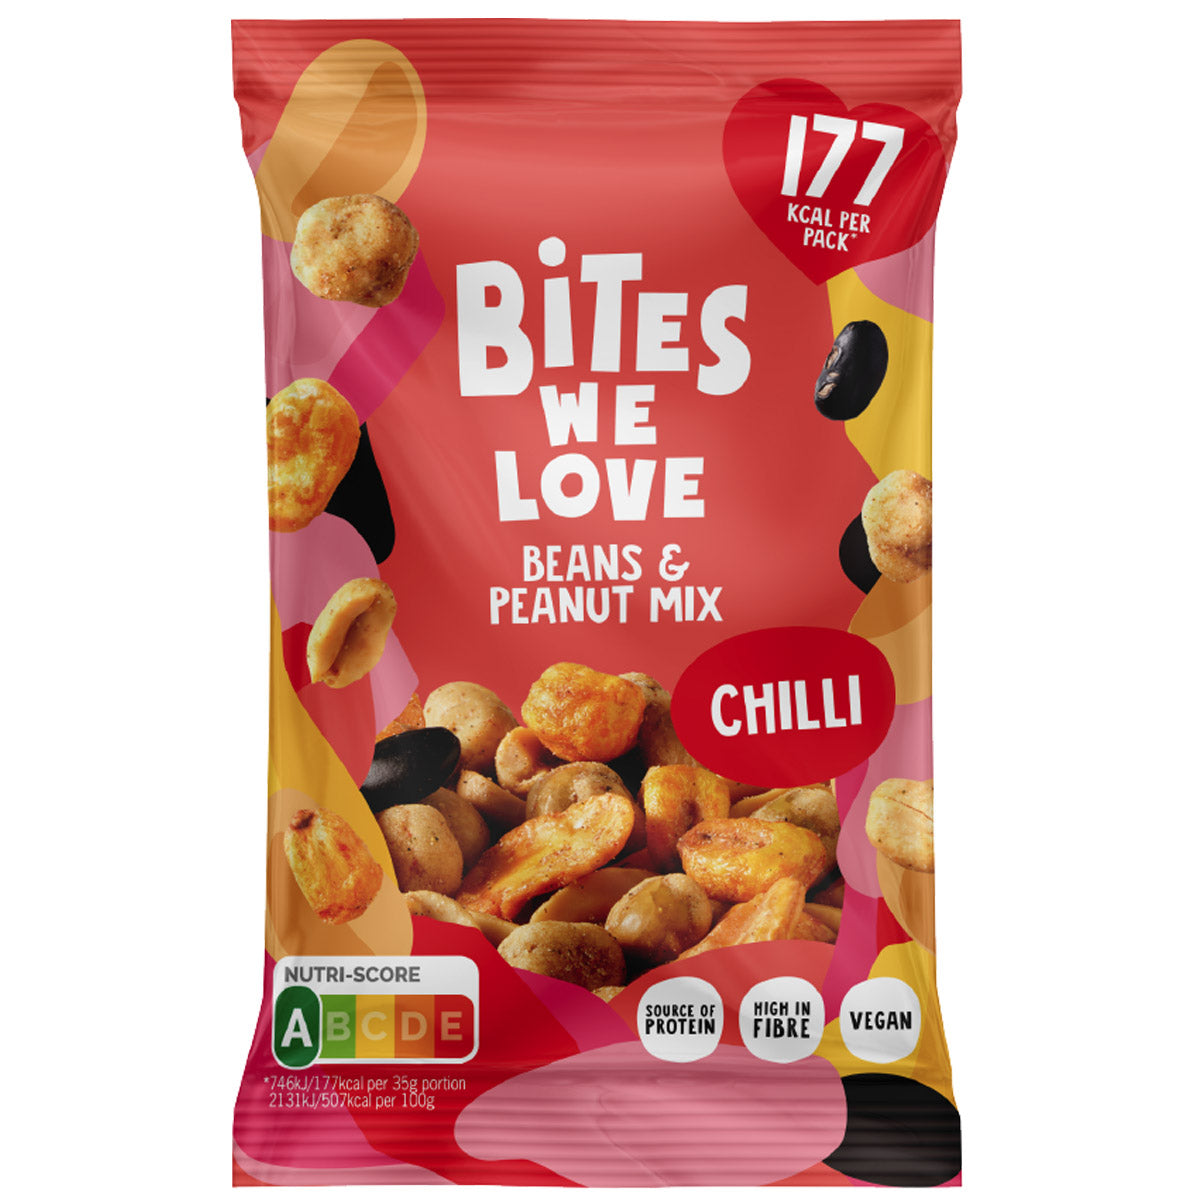 BitesWeLove nootjes Beans & Peanut Mix Chilli